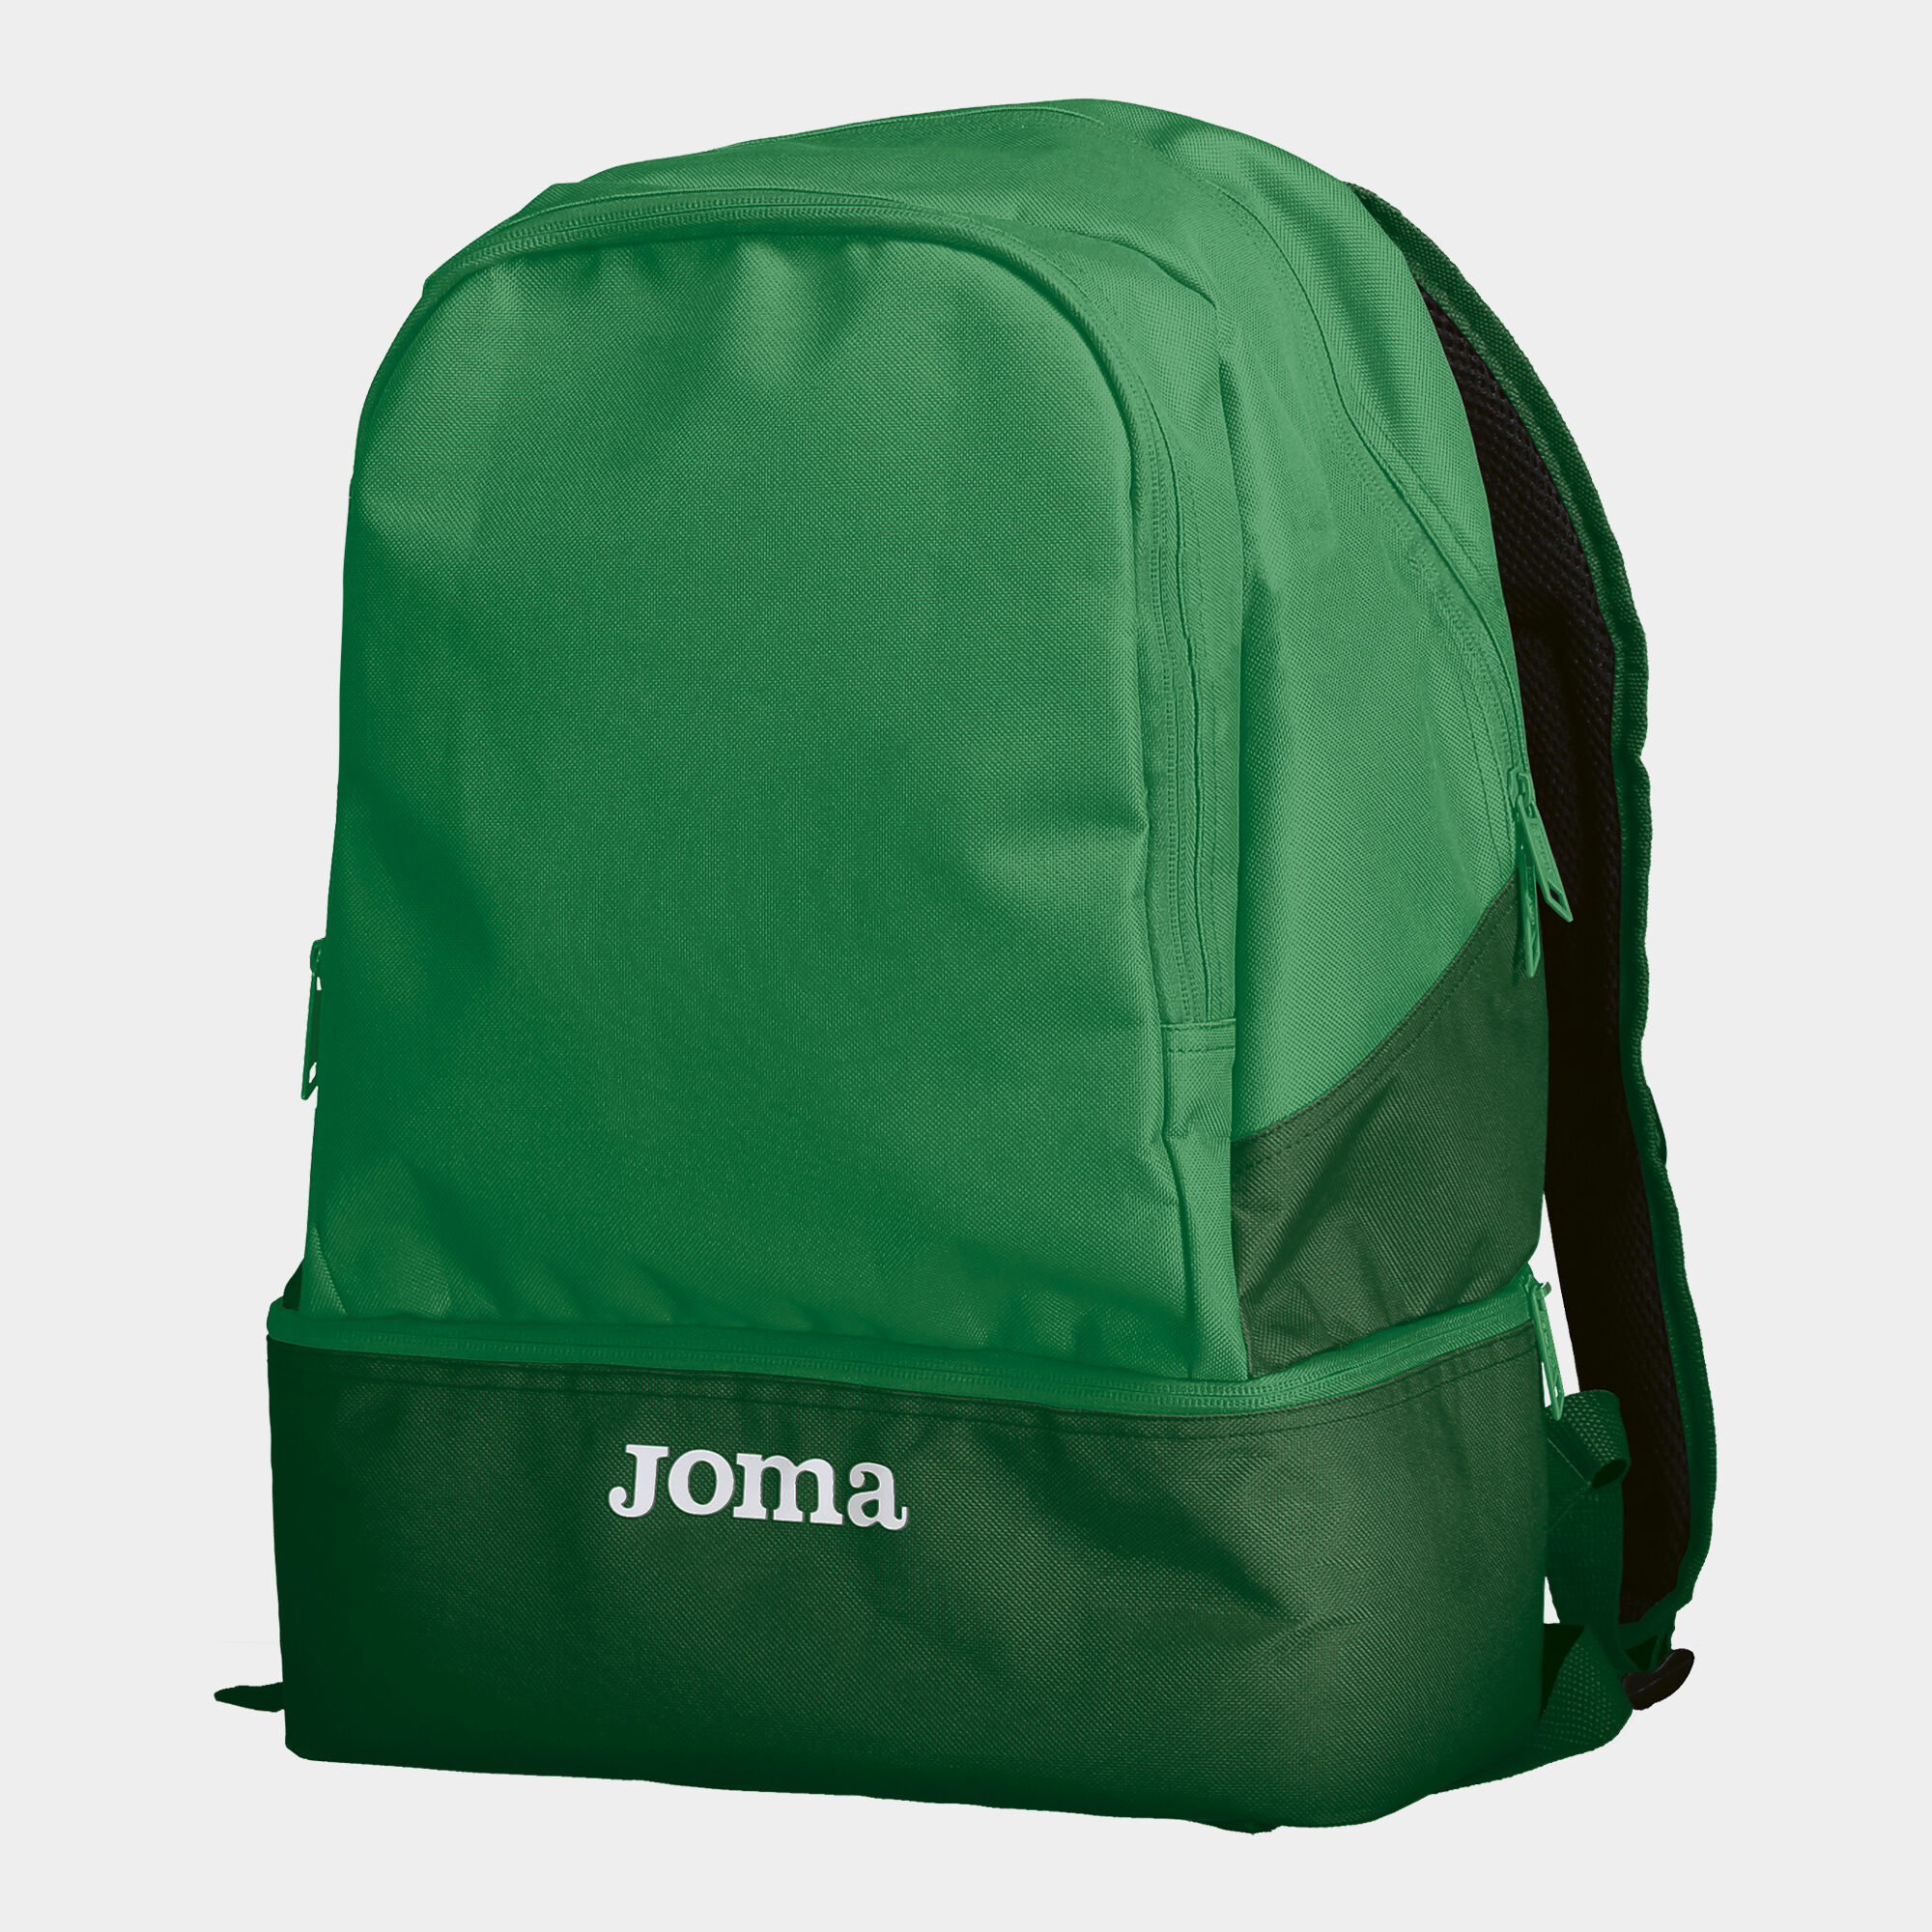 Joma MOCHILA ESTADIO III Tasche Rucksack Backpack Schuhfach 